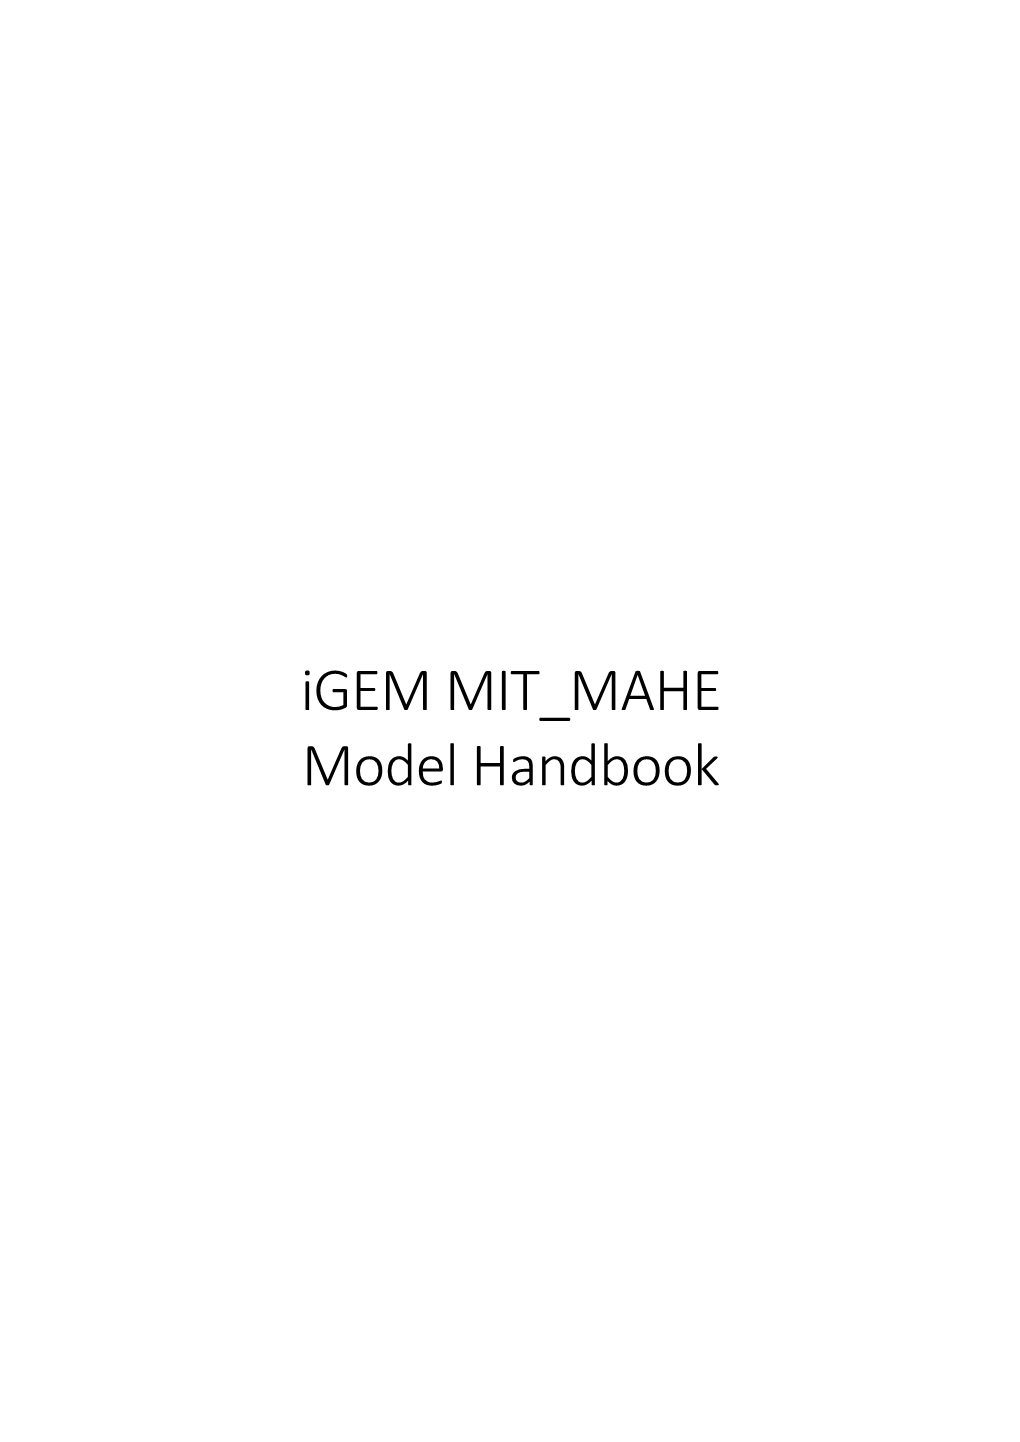 Igem MIT MAHE Model Handbook